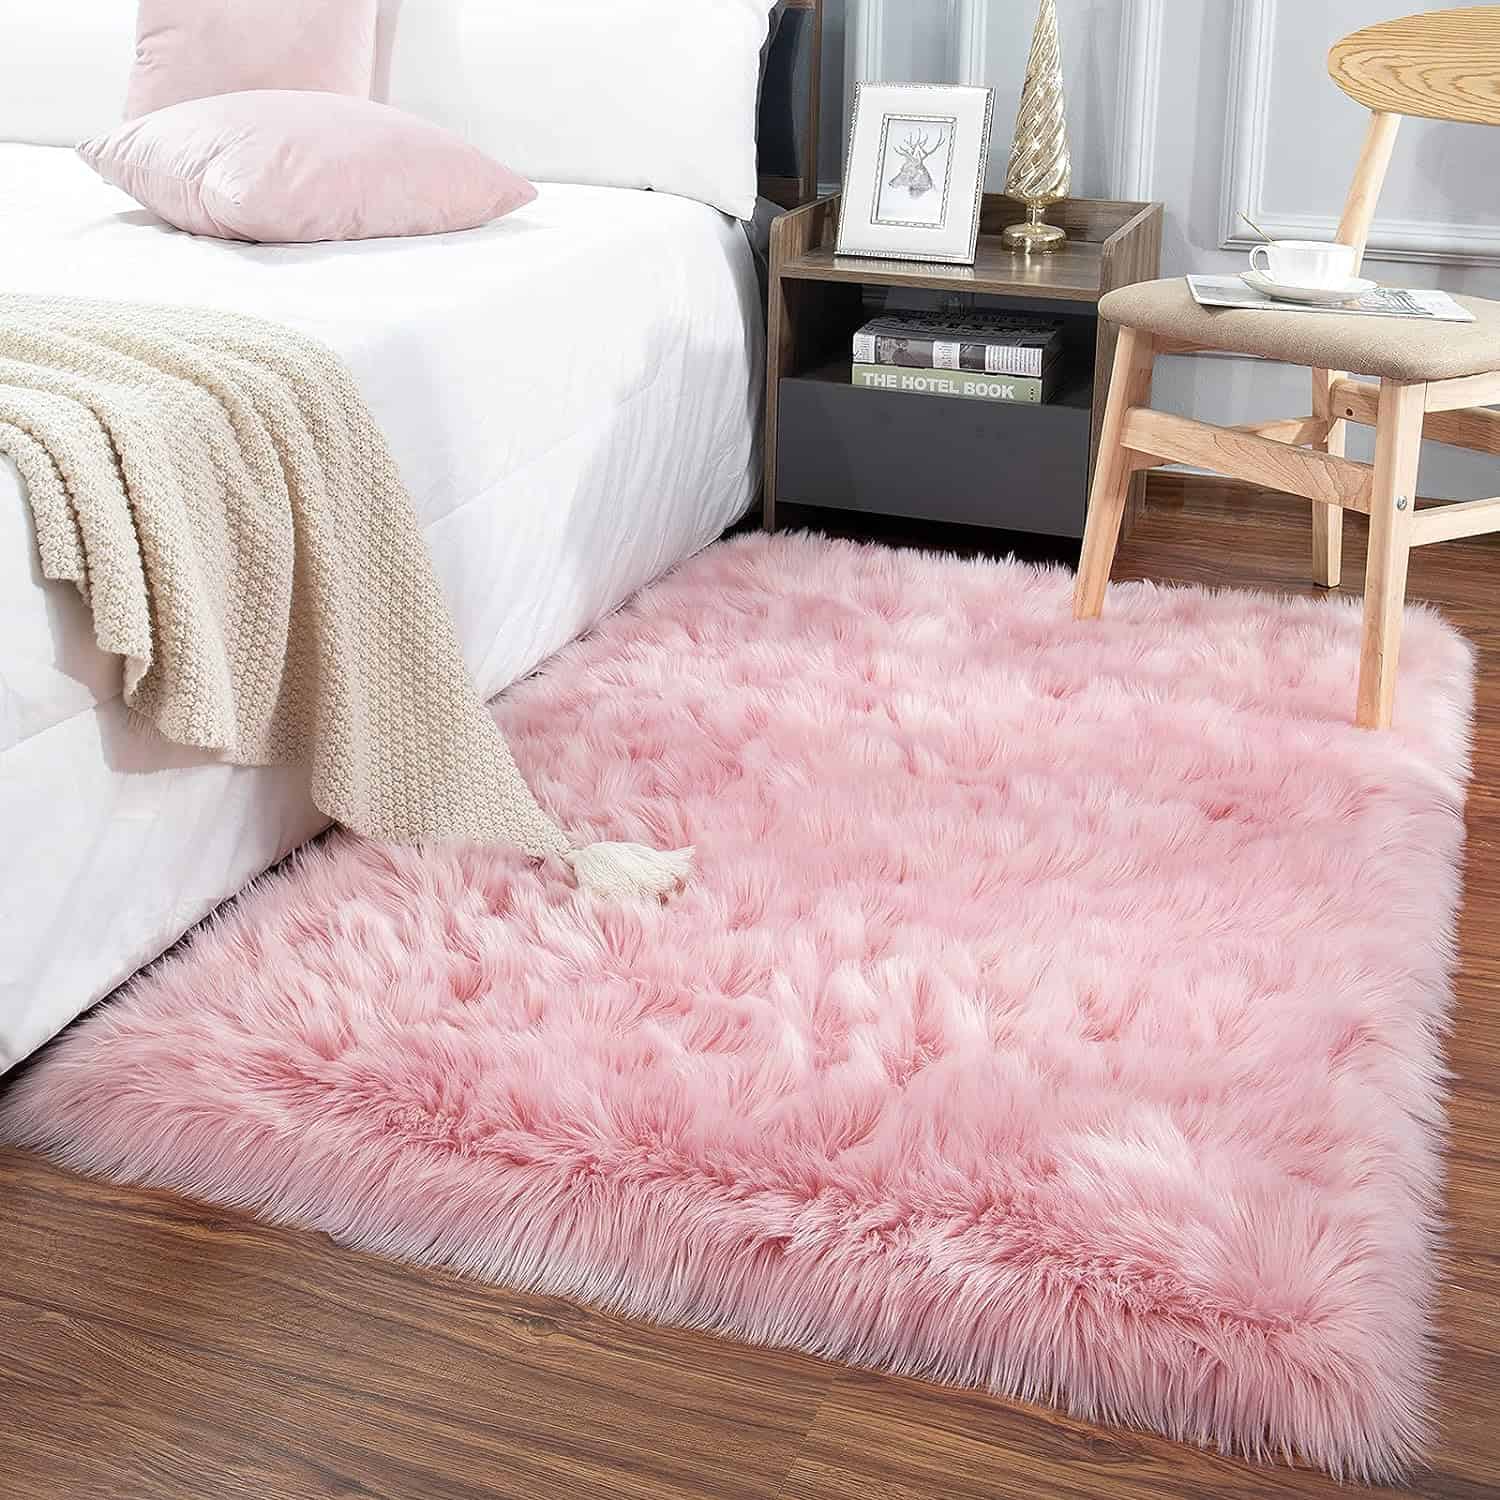 dorm room rugs